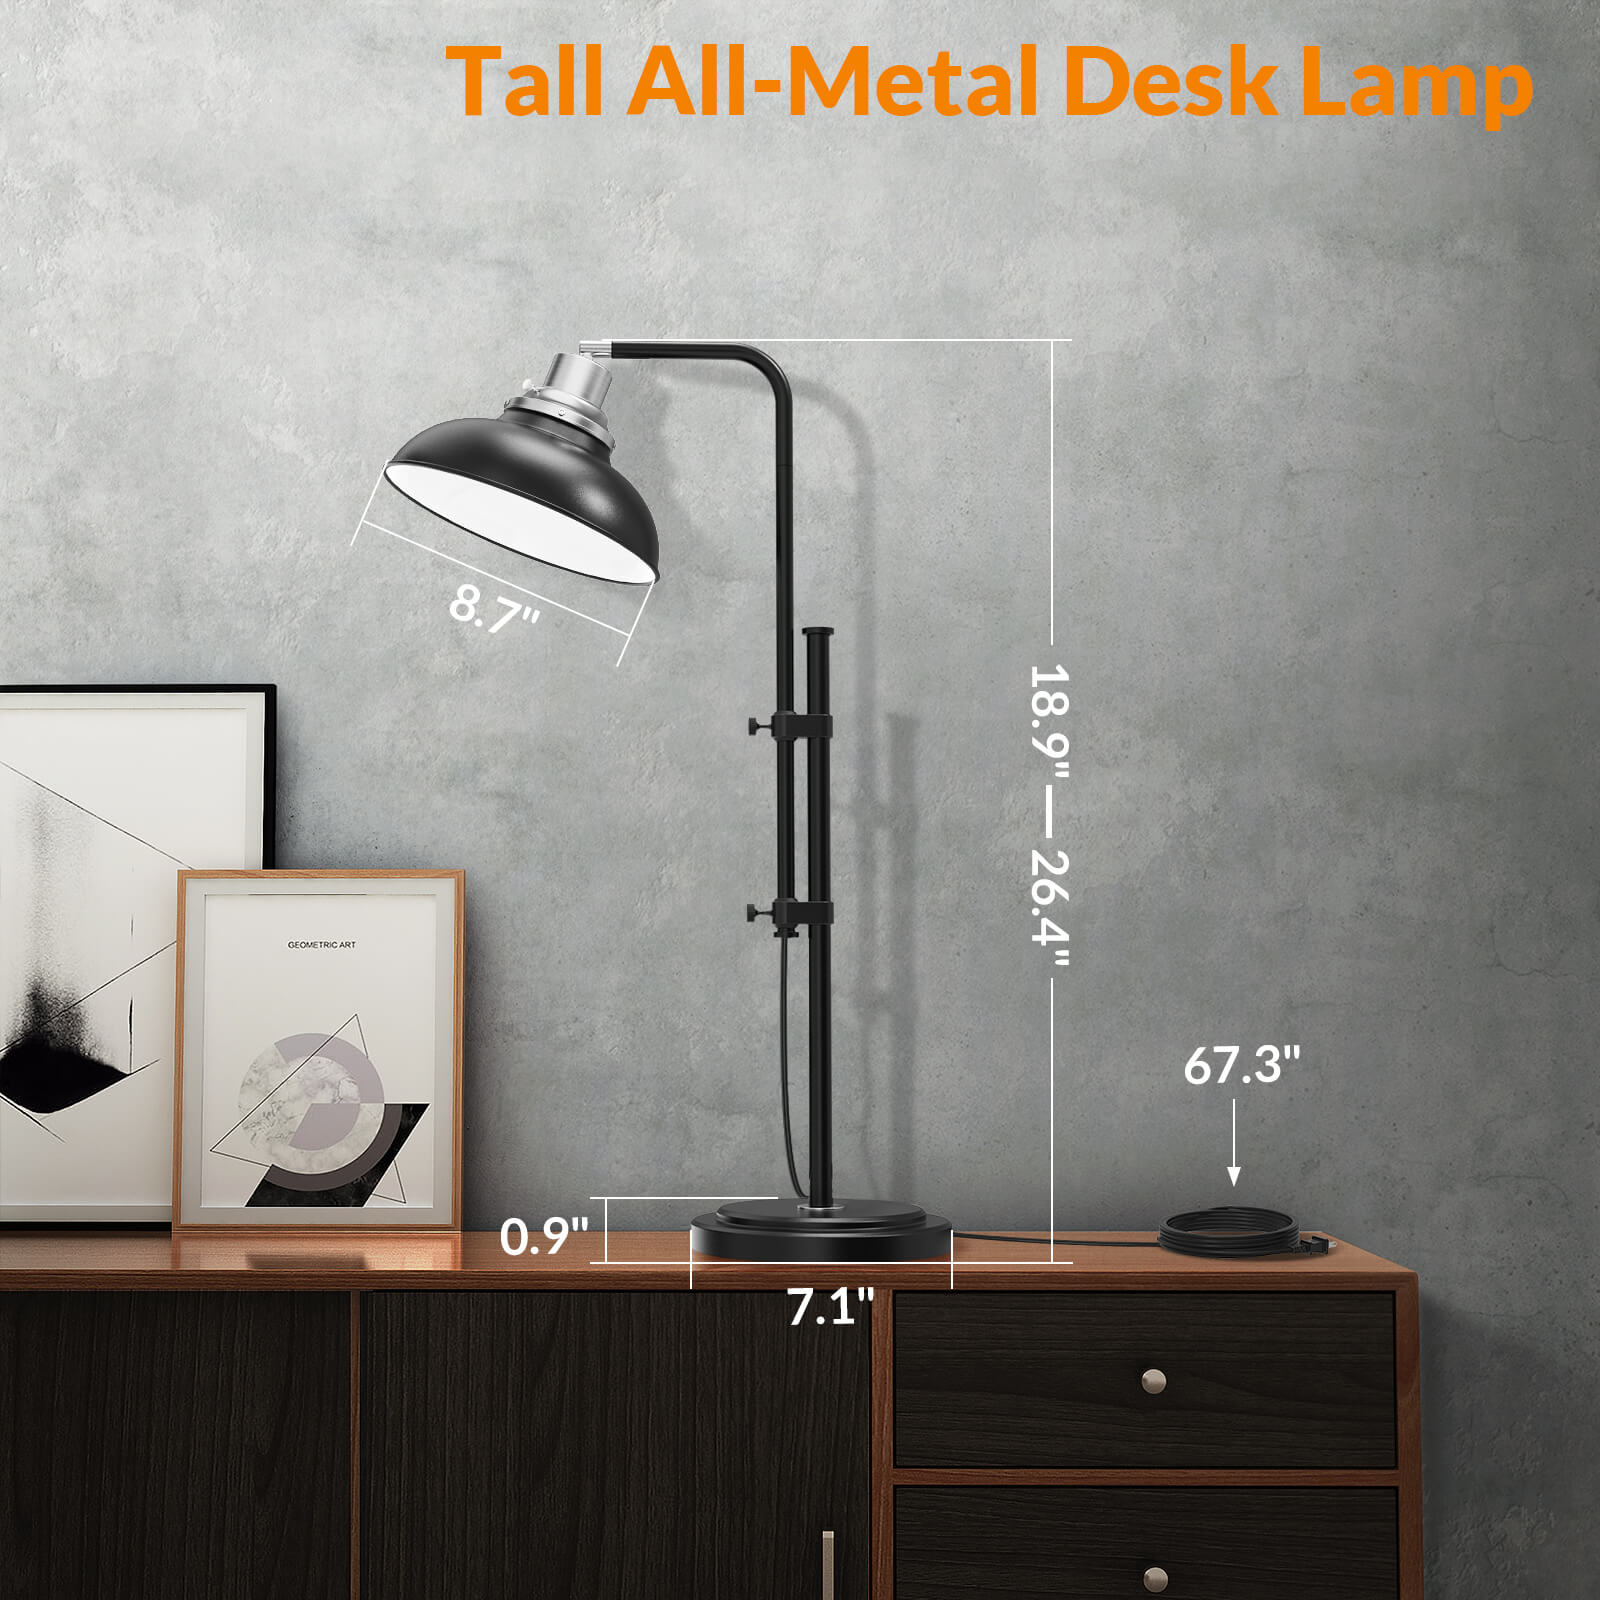 LEPOWER Metal Desk Lamp Size